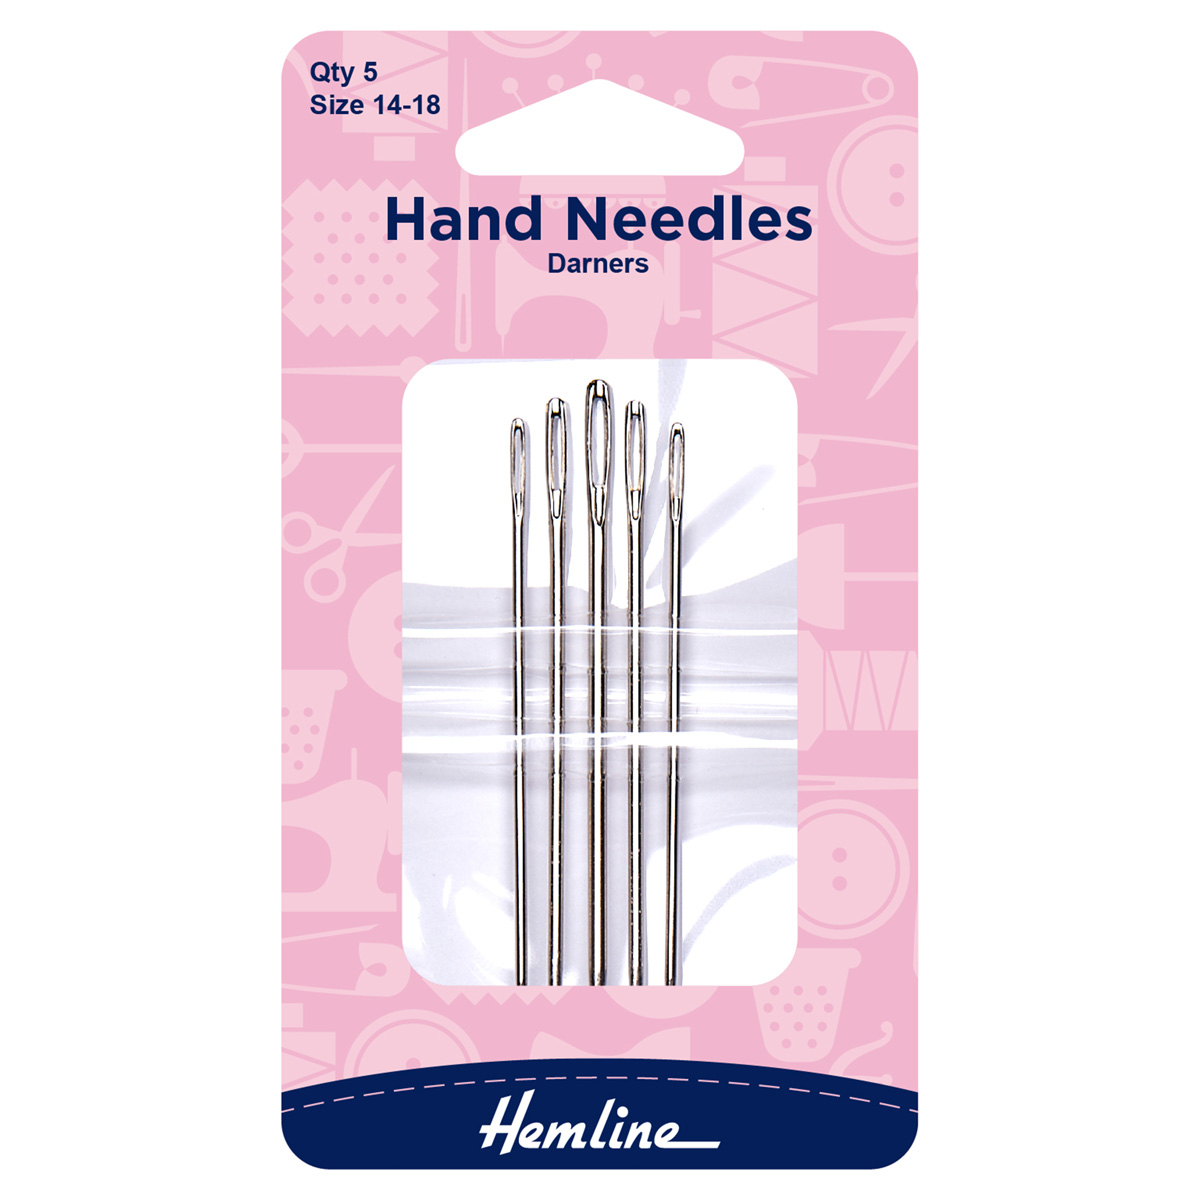 Hemline Hand Needles Darners Size 14-18